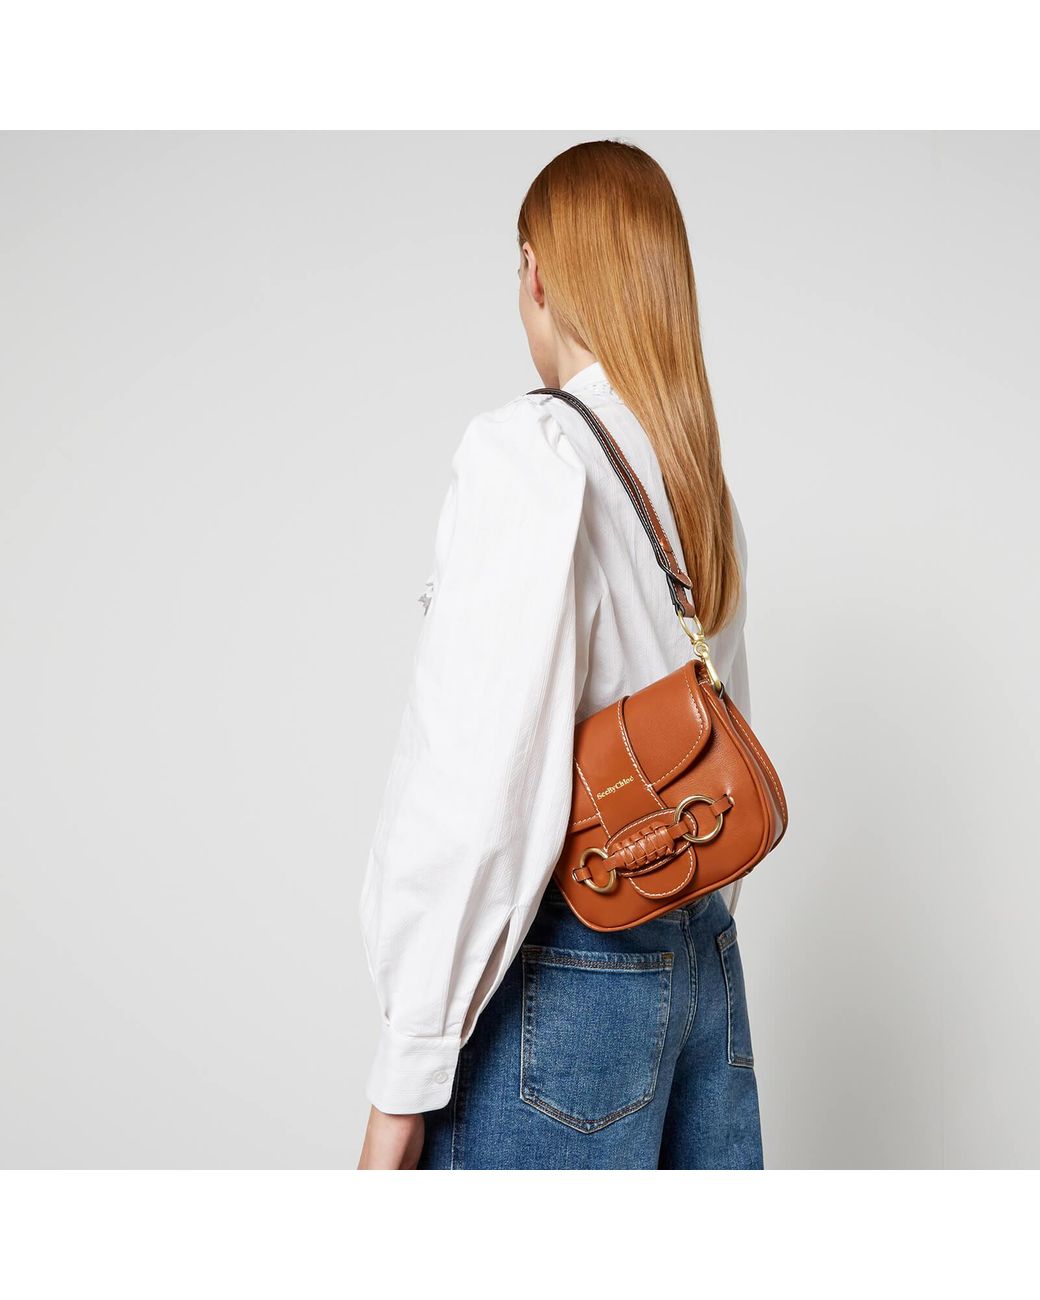 See By Chloé Saddie Leather Bag in Brown | Lyst